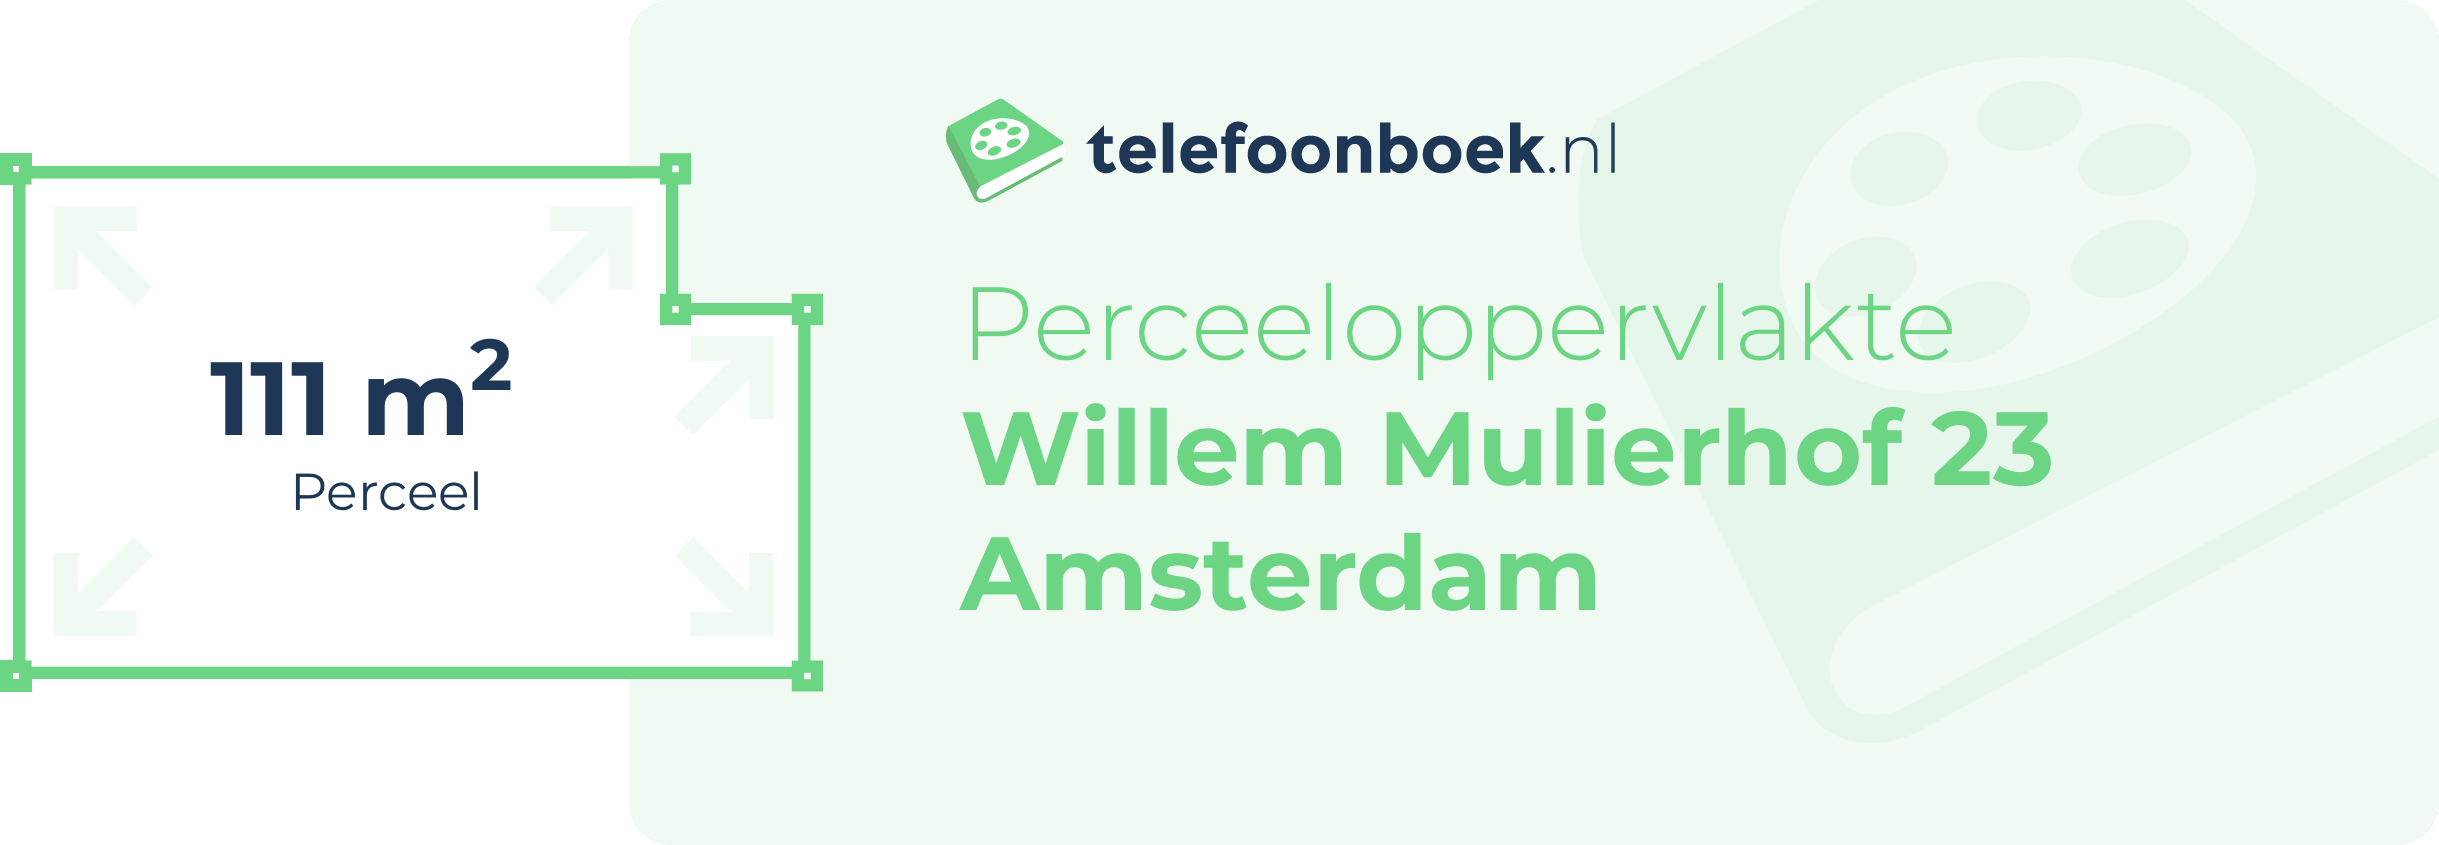 Perceeloppervlakte Willem Mulierhof 23 Amsterdam